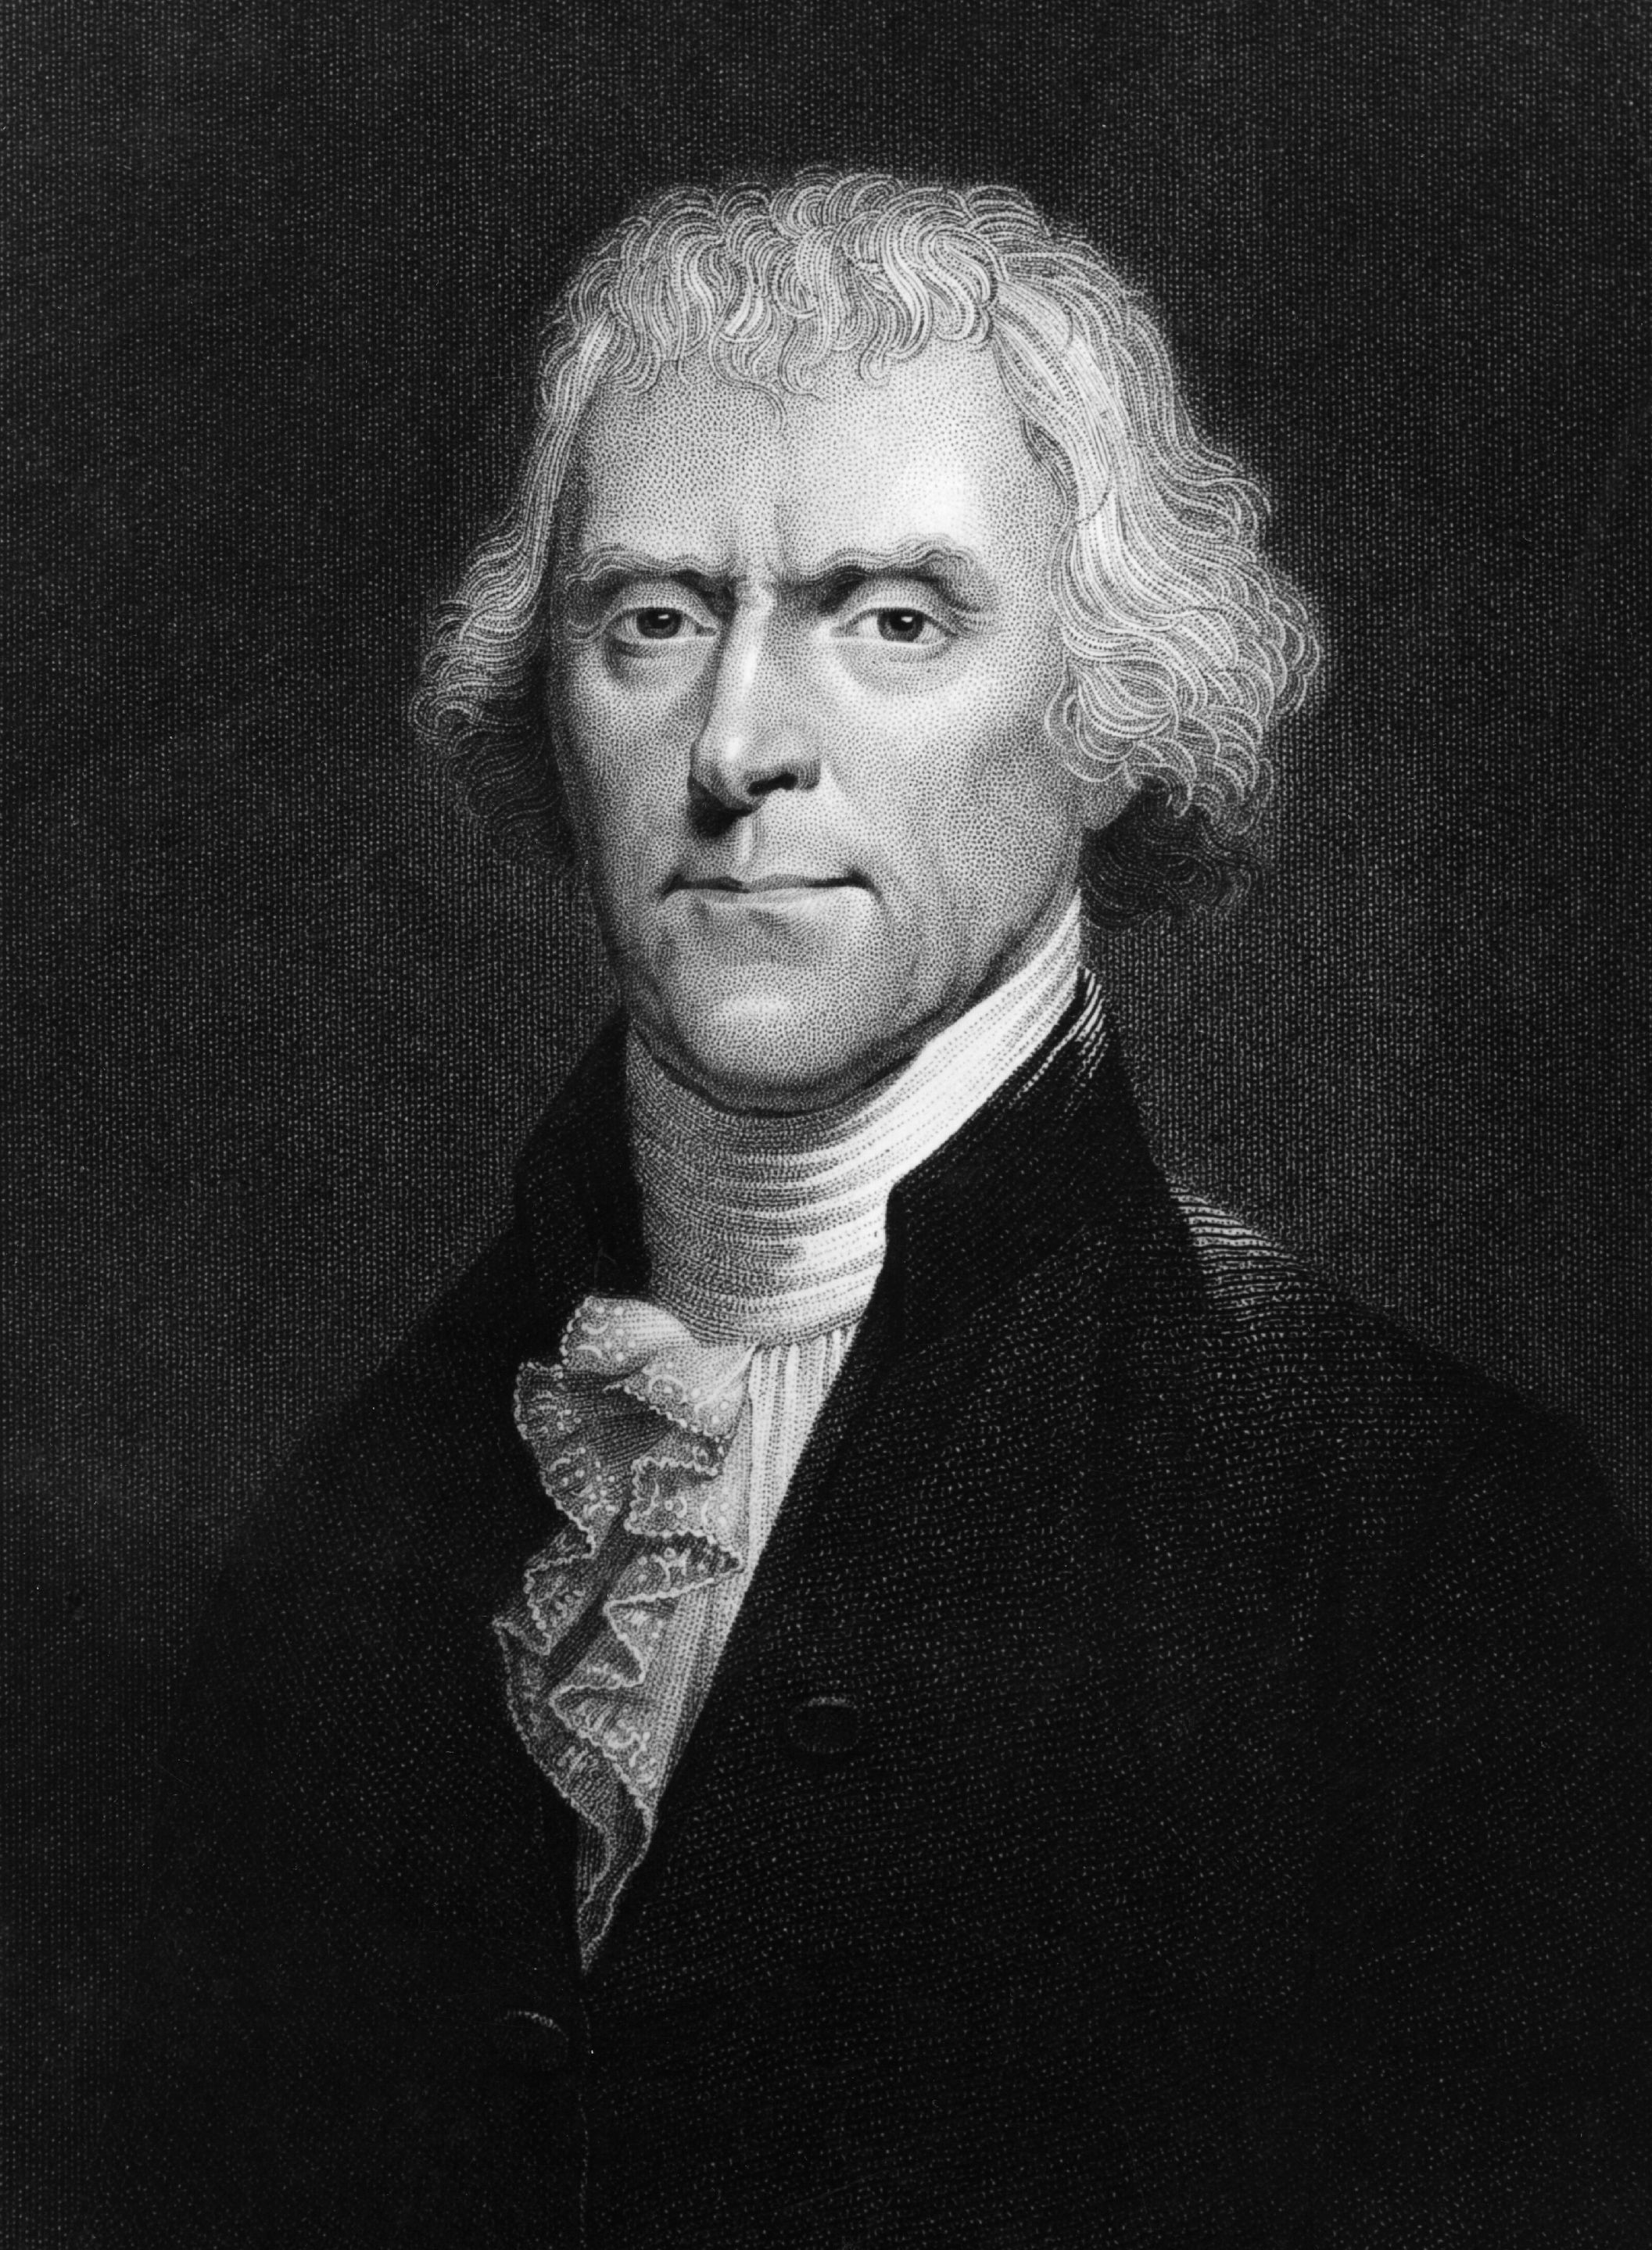 Thomas Jefferson's Record on Slavery Wasn't All Bad